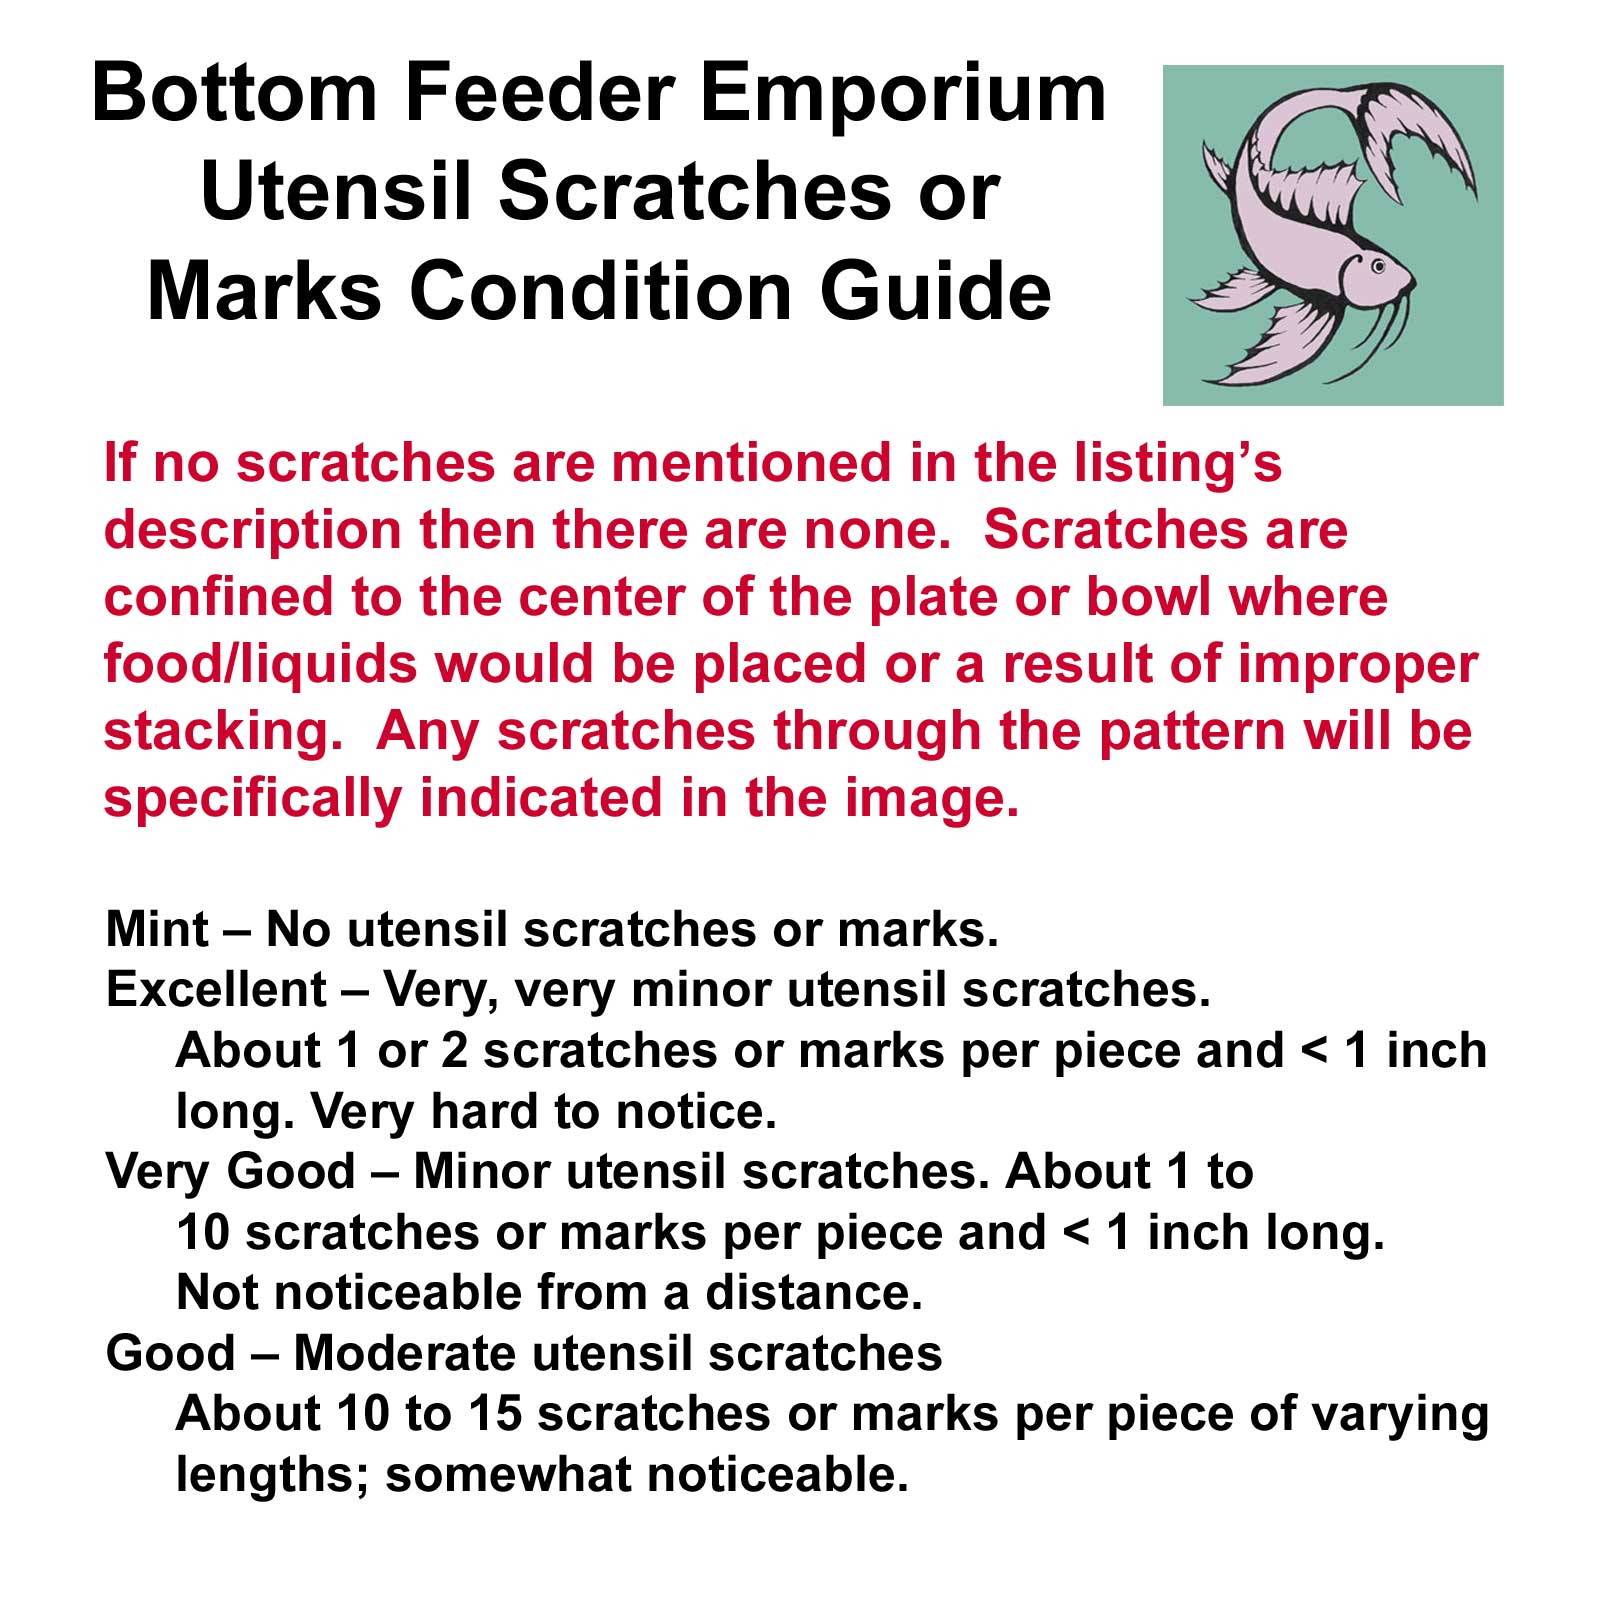 Bottom Feeder Emporium Utensil Scratches or Marks Condition Guide